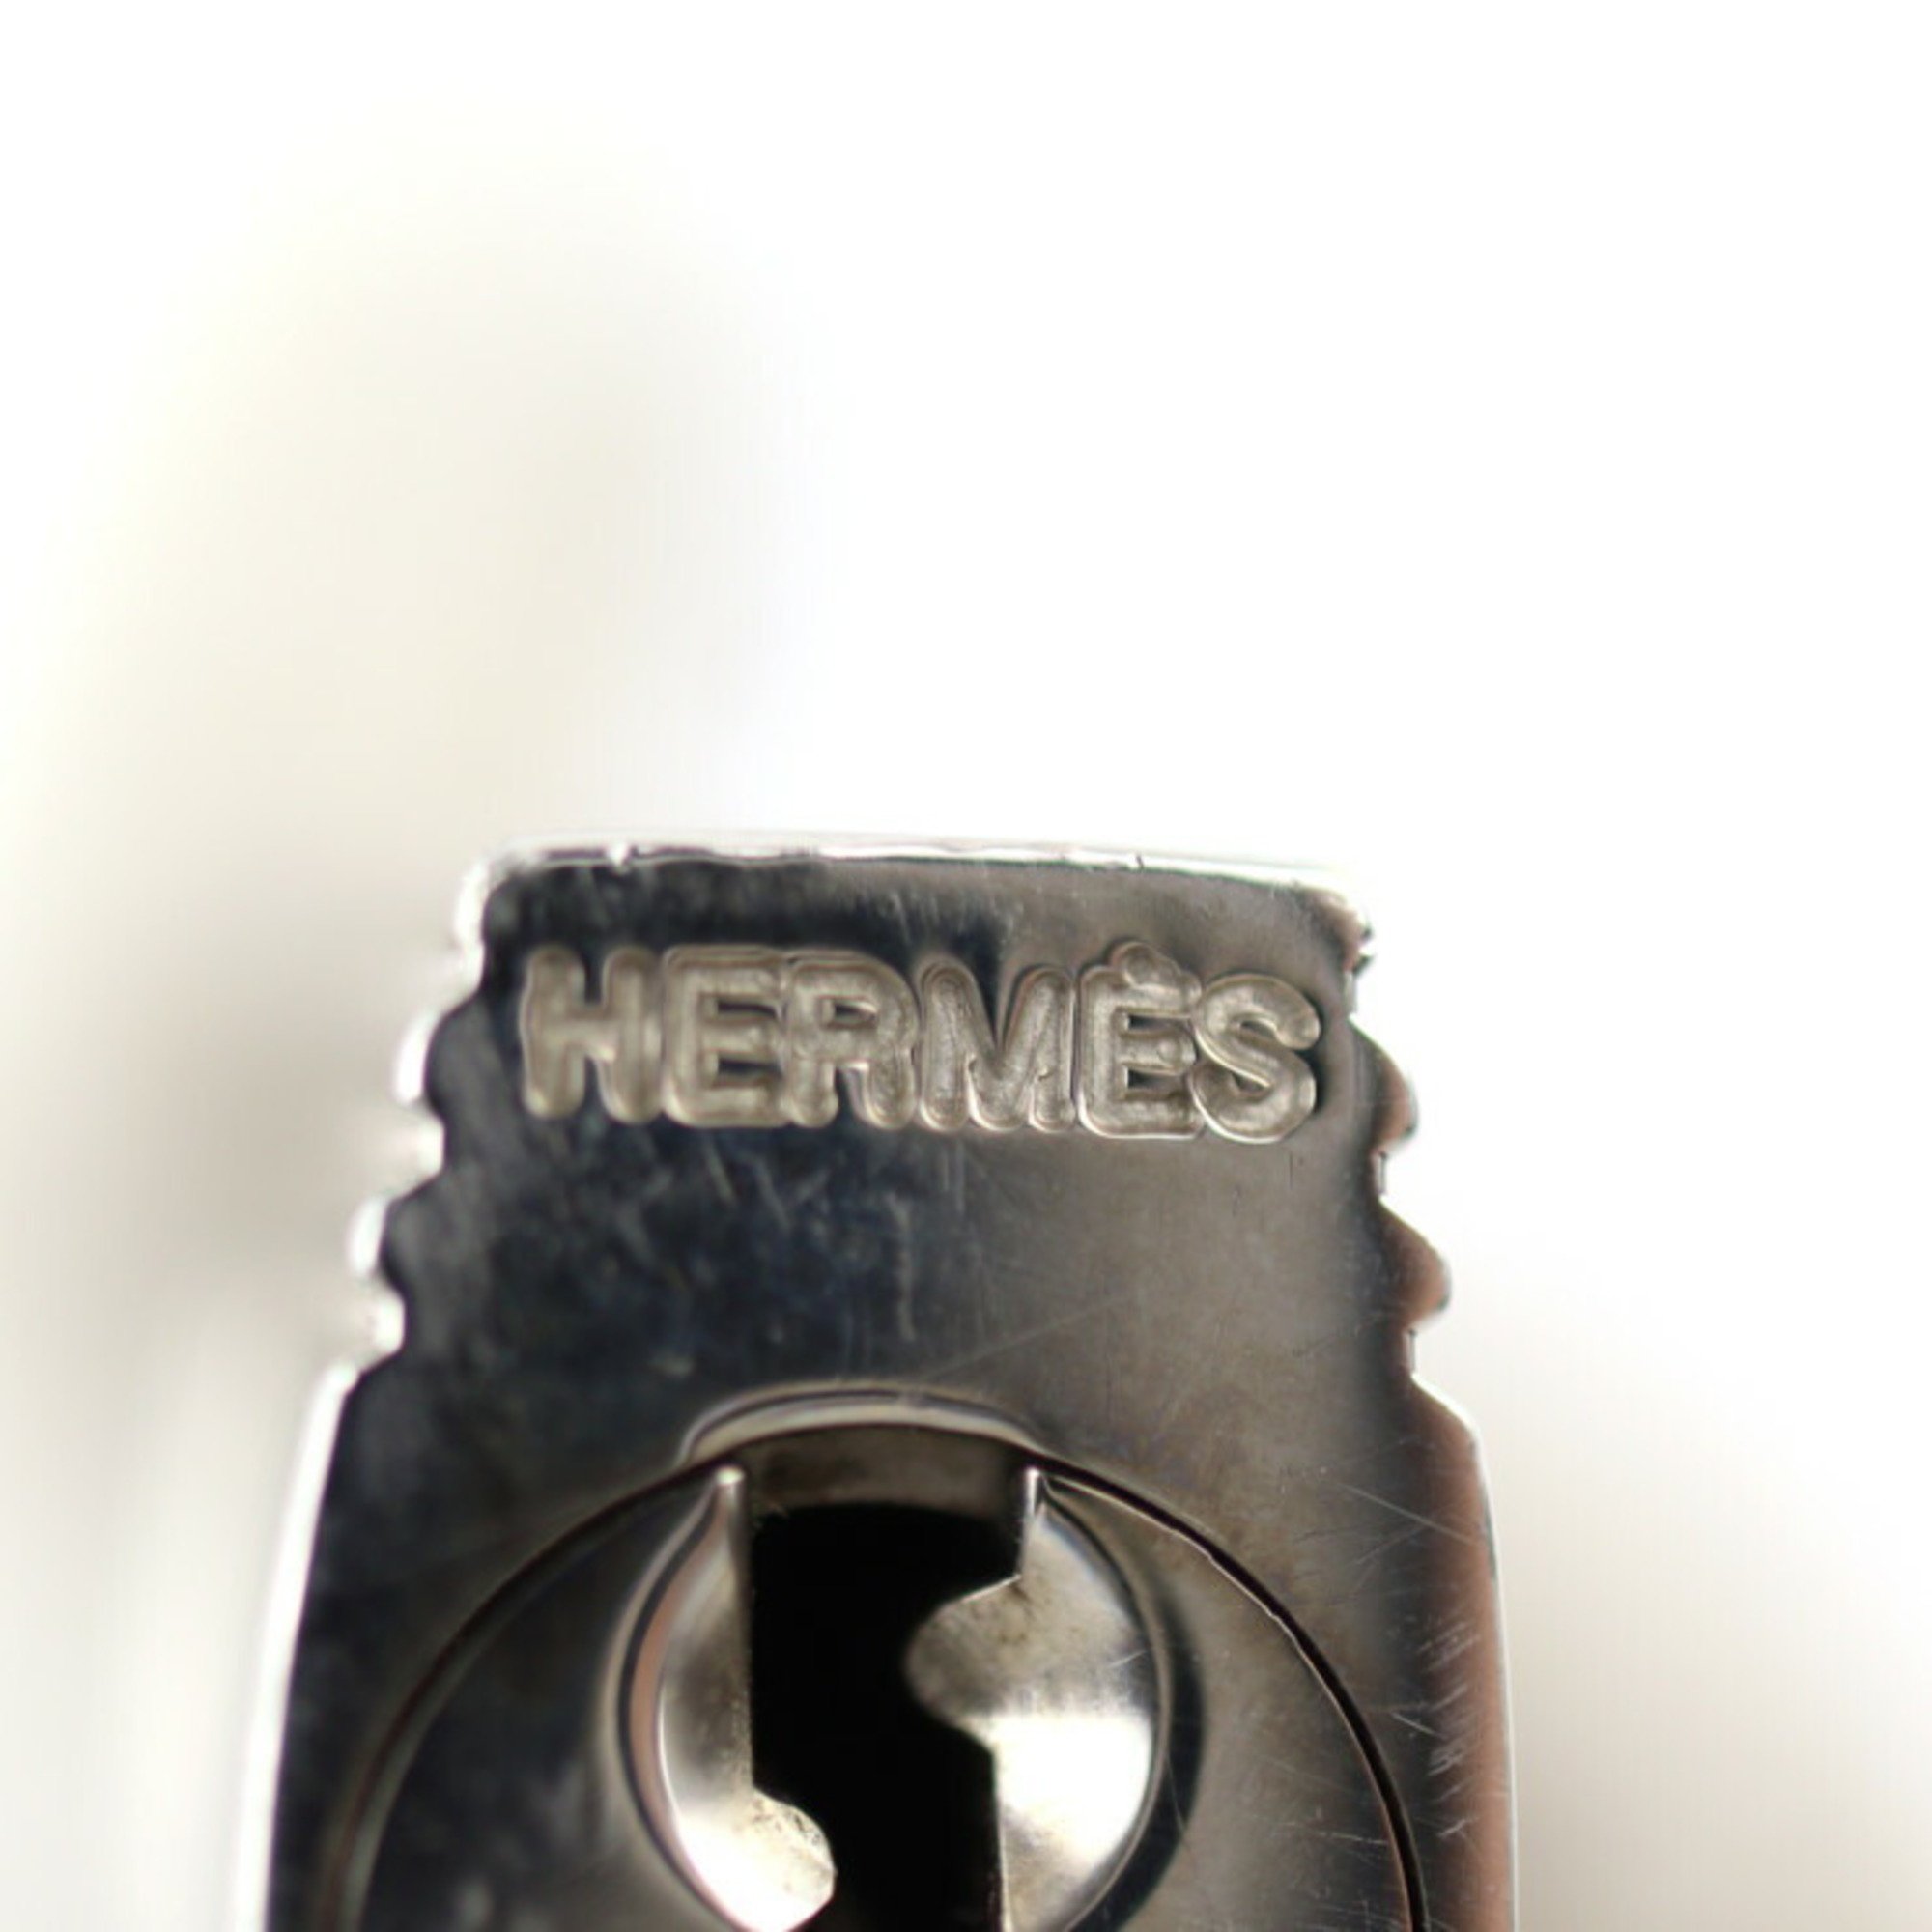 HERMES Padlock Cadena Metal Silver Key Bag Charm